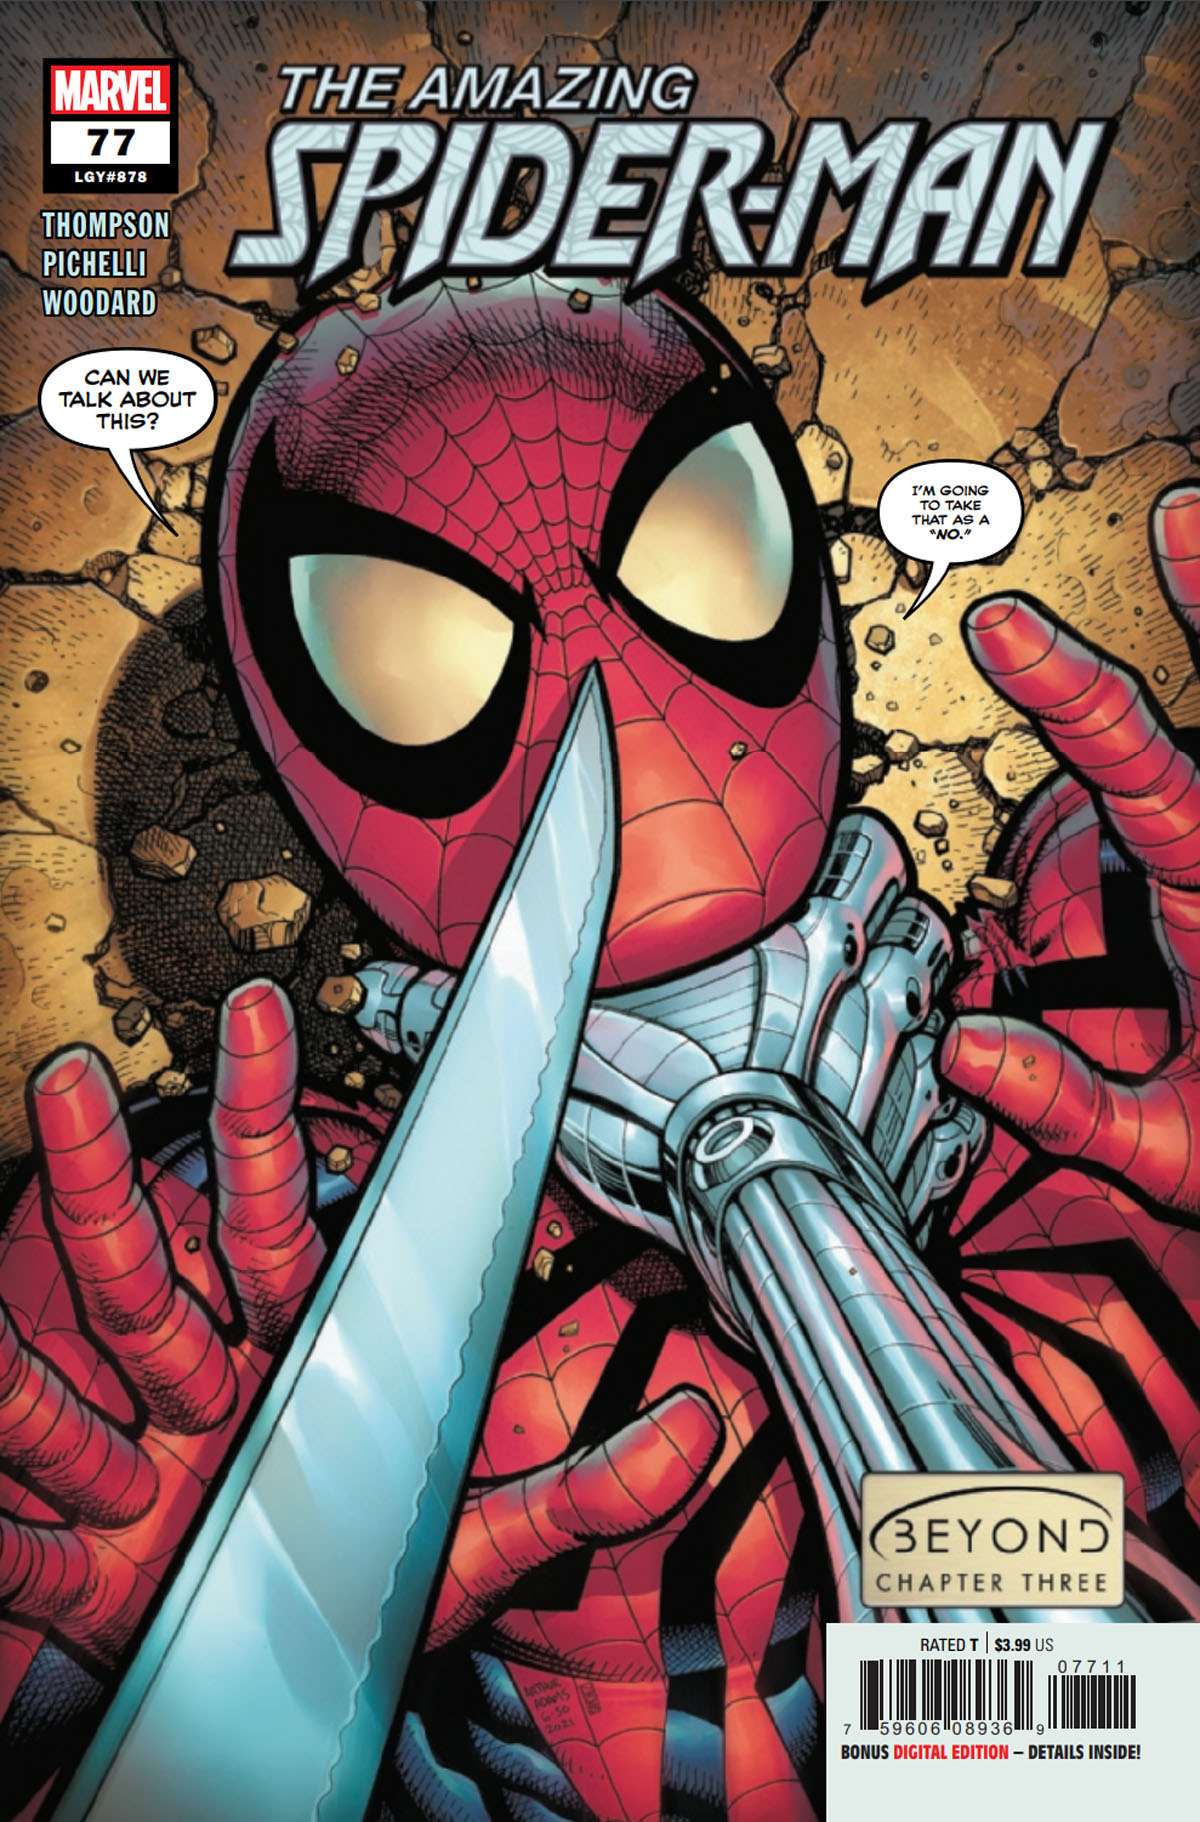 Amazing Spider-Man #77 cover